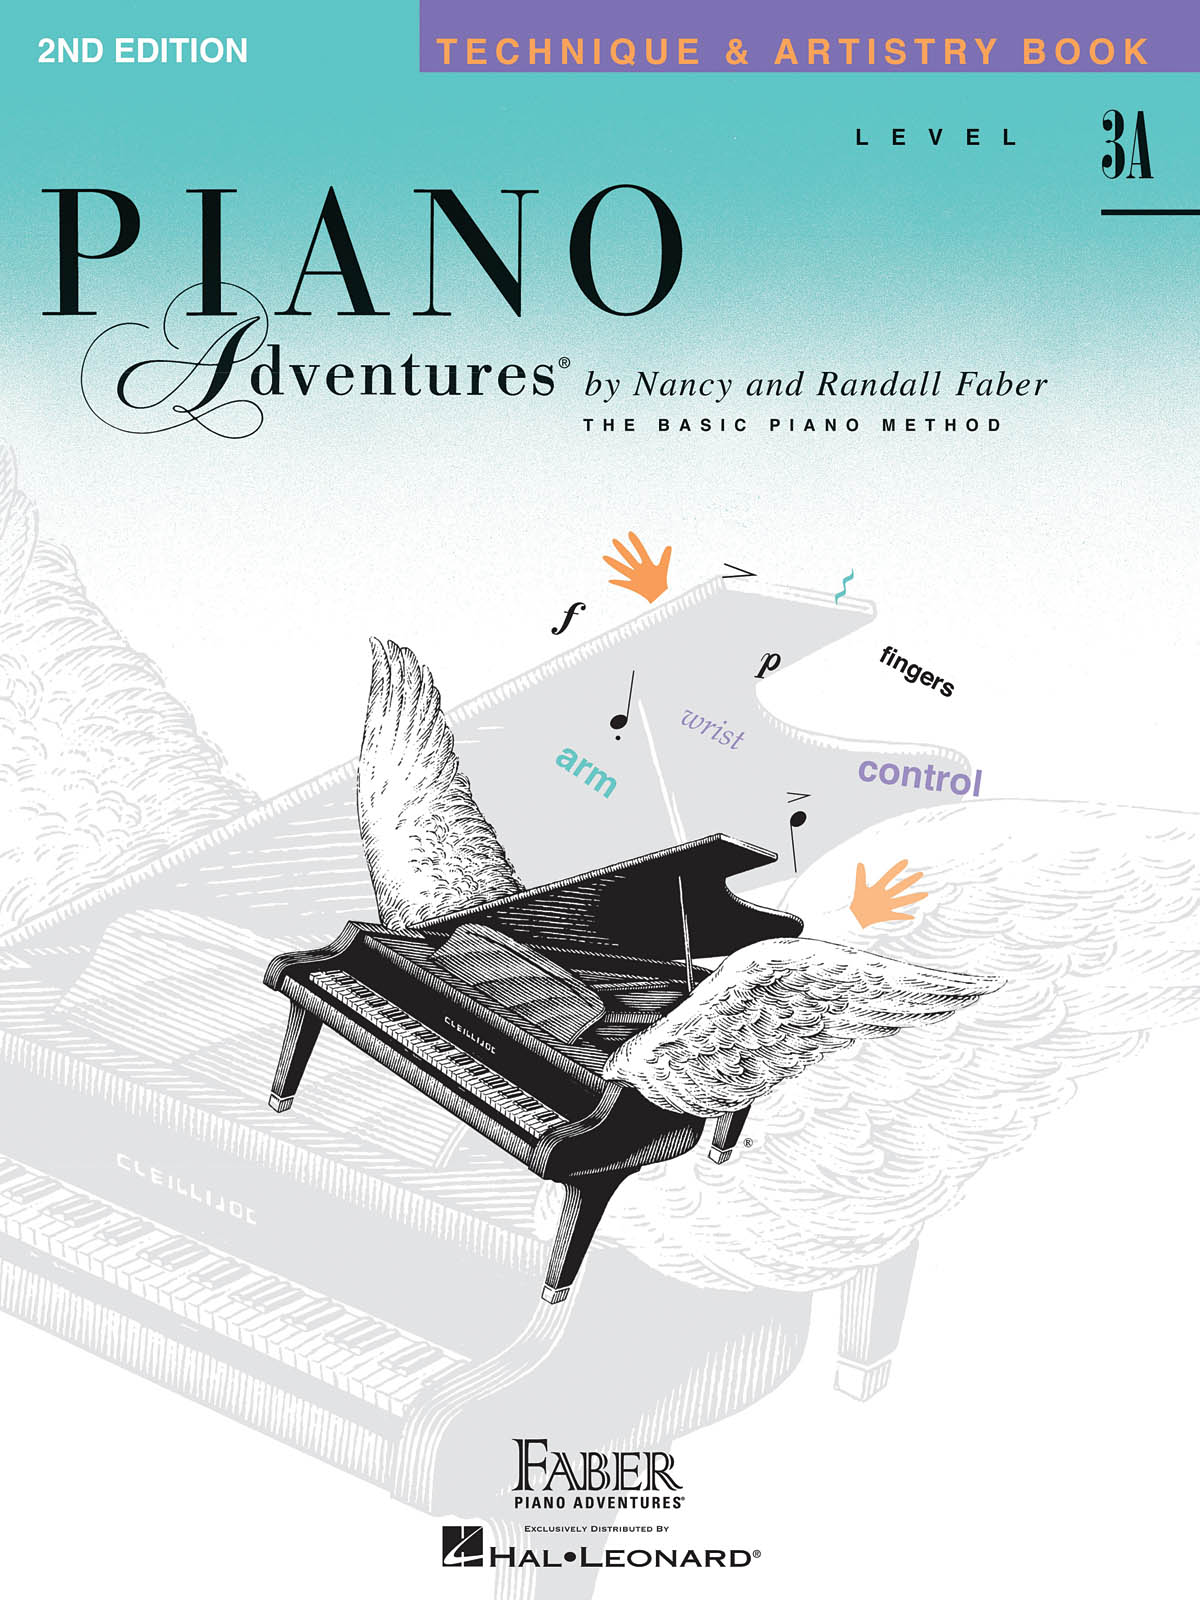 Piano Adventured Technique & Artistry Book - Level 3A, 2nd Edition - škola hry na klavír